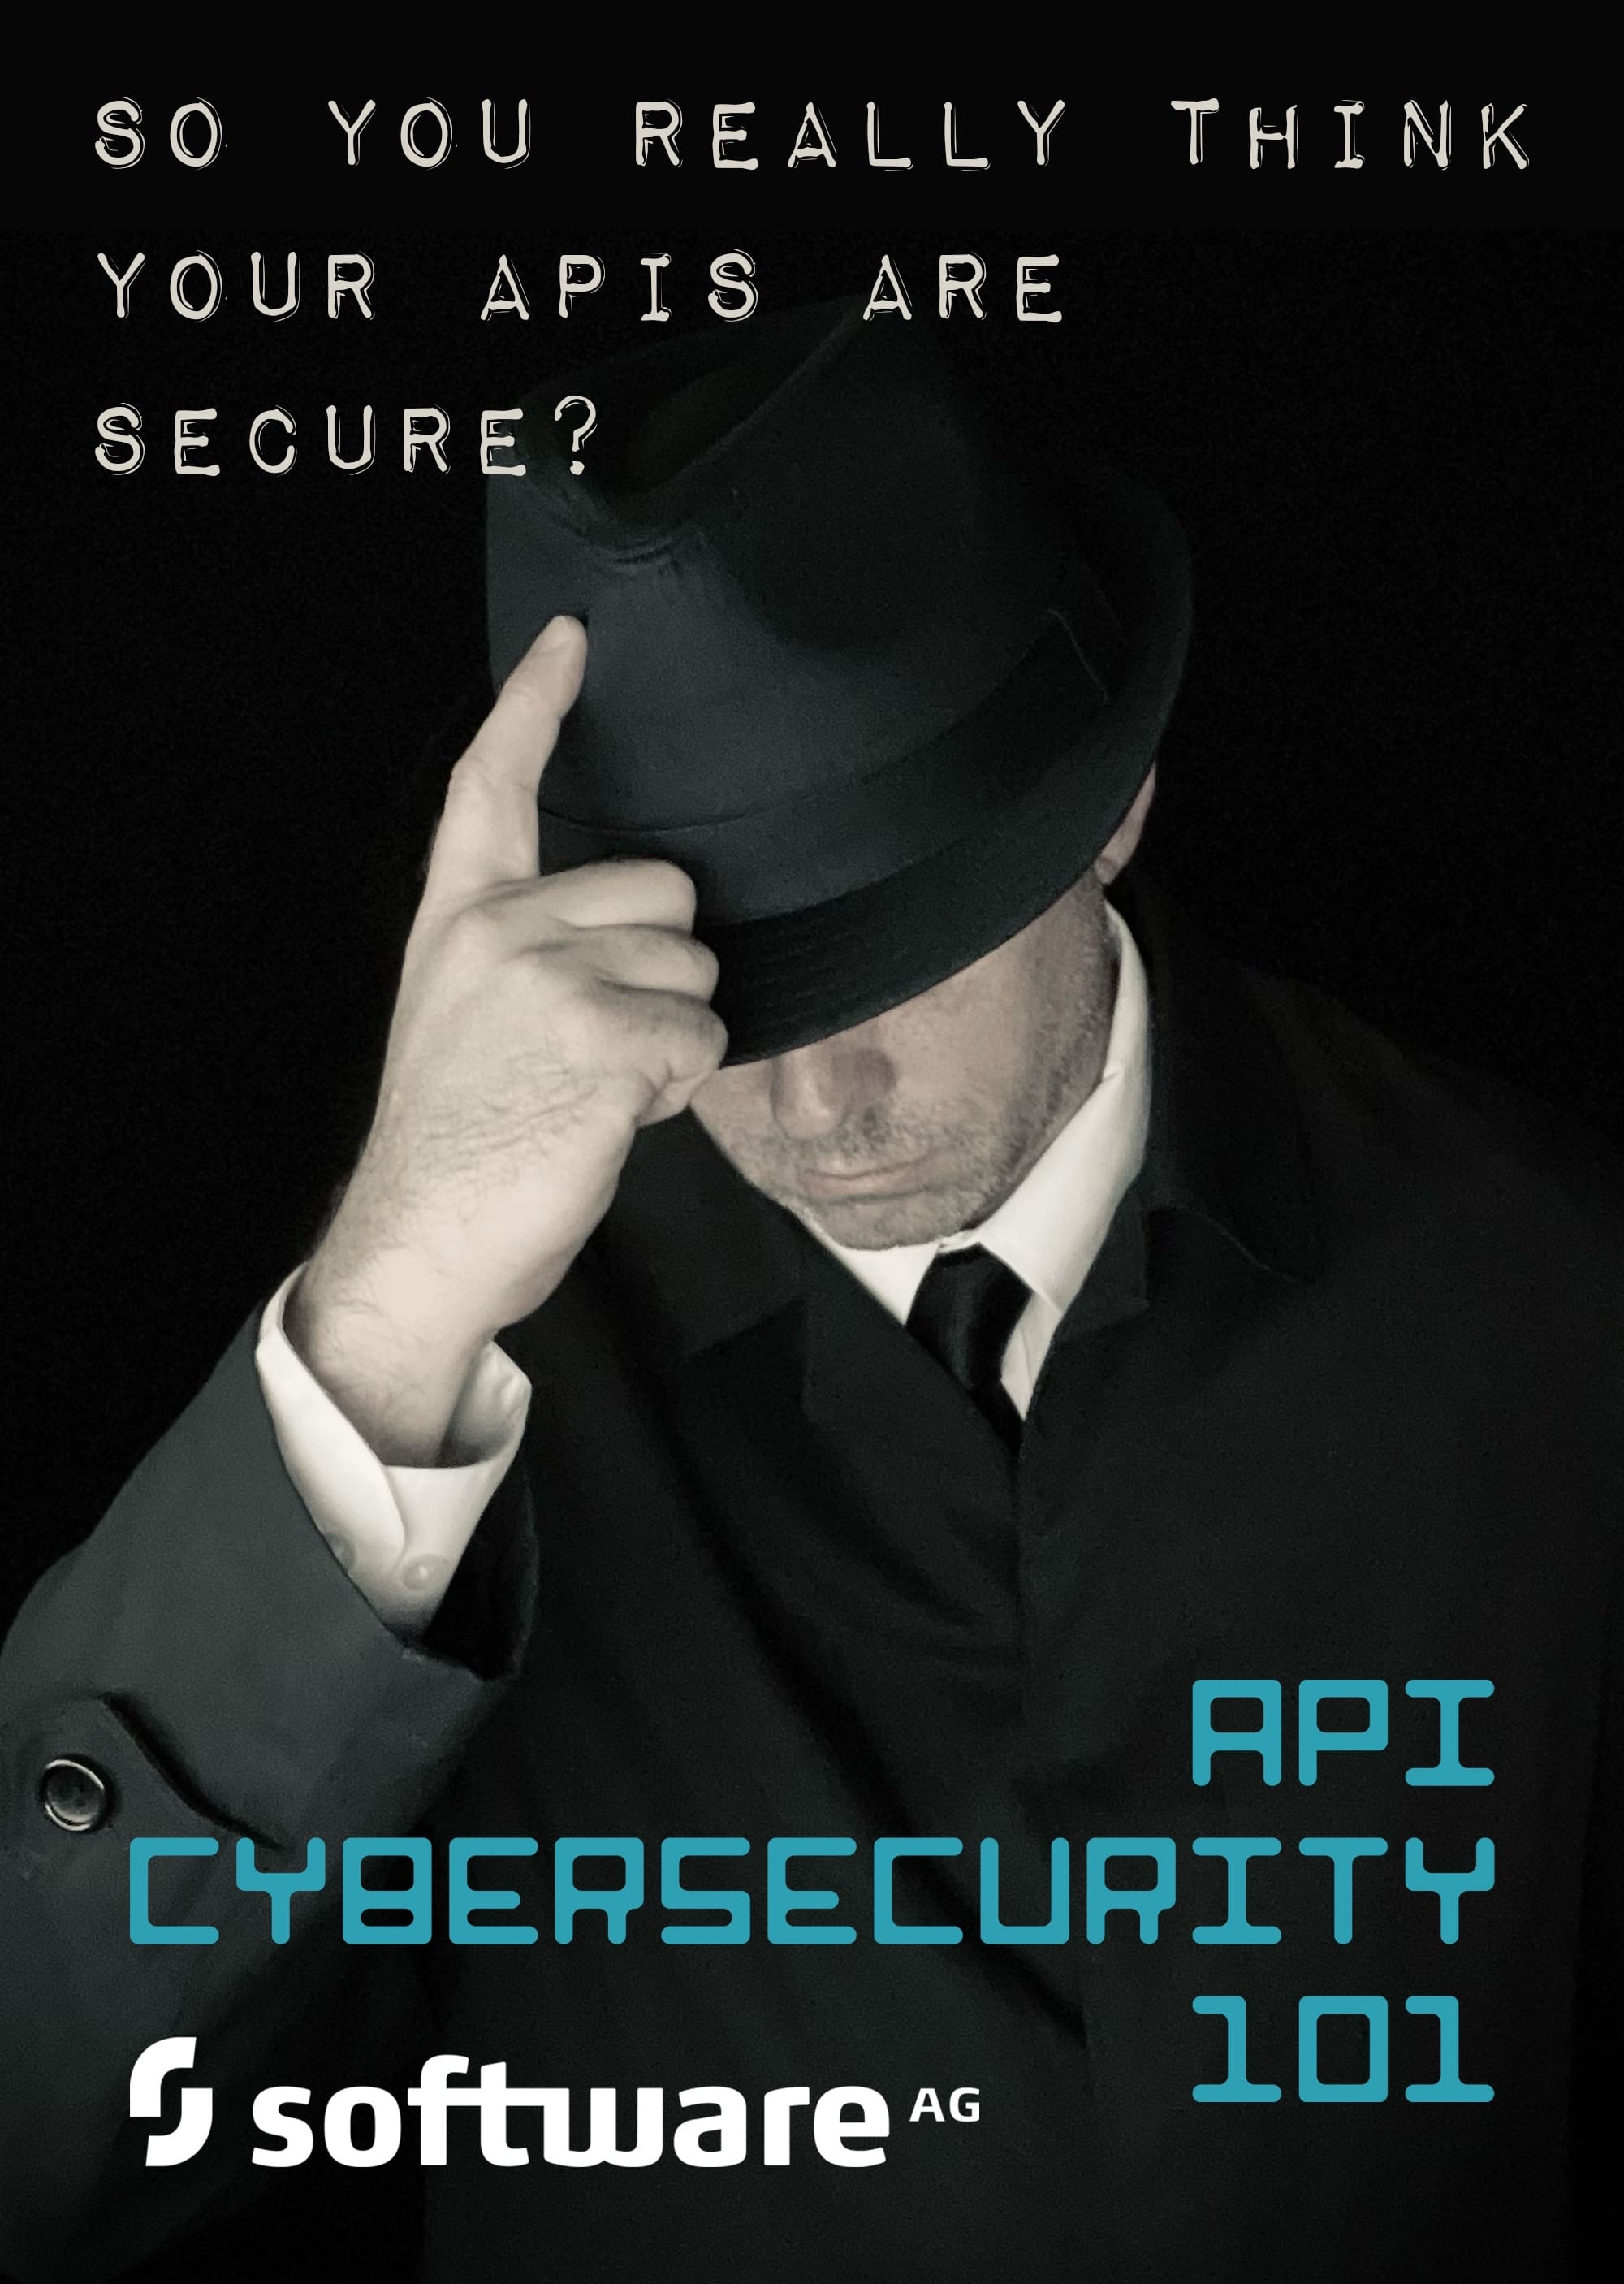 API Cybersecurity 101